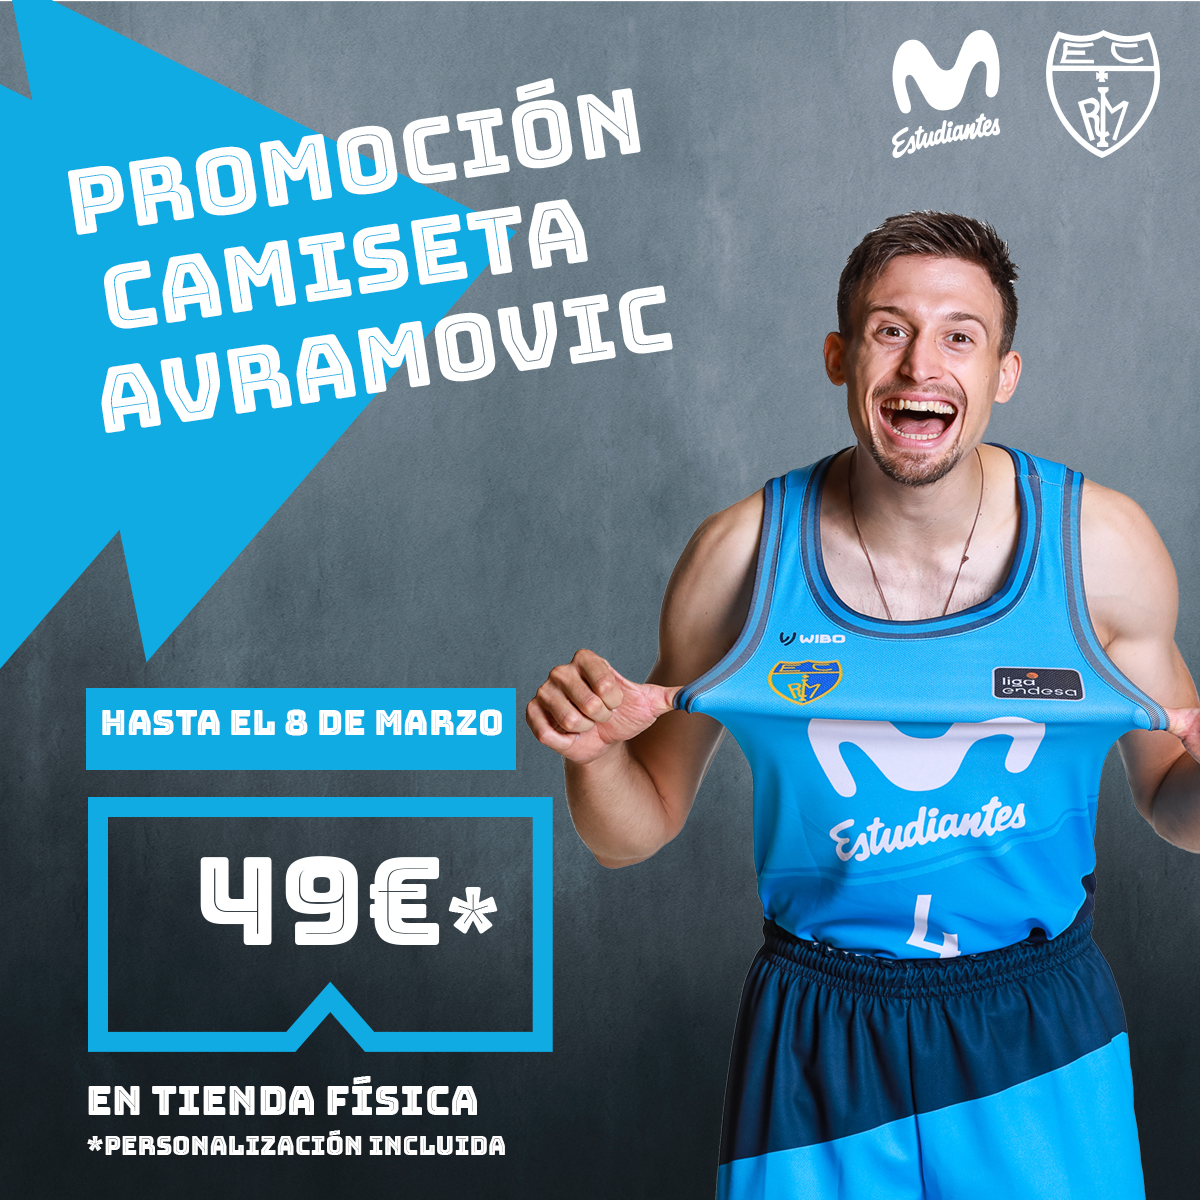 PROMO FLASH: camiseta Avramovic por 49 euros solo hoy lunes